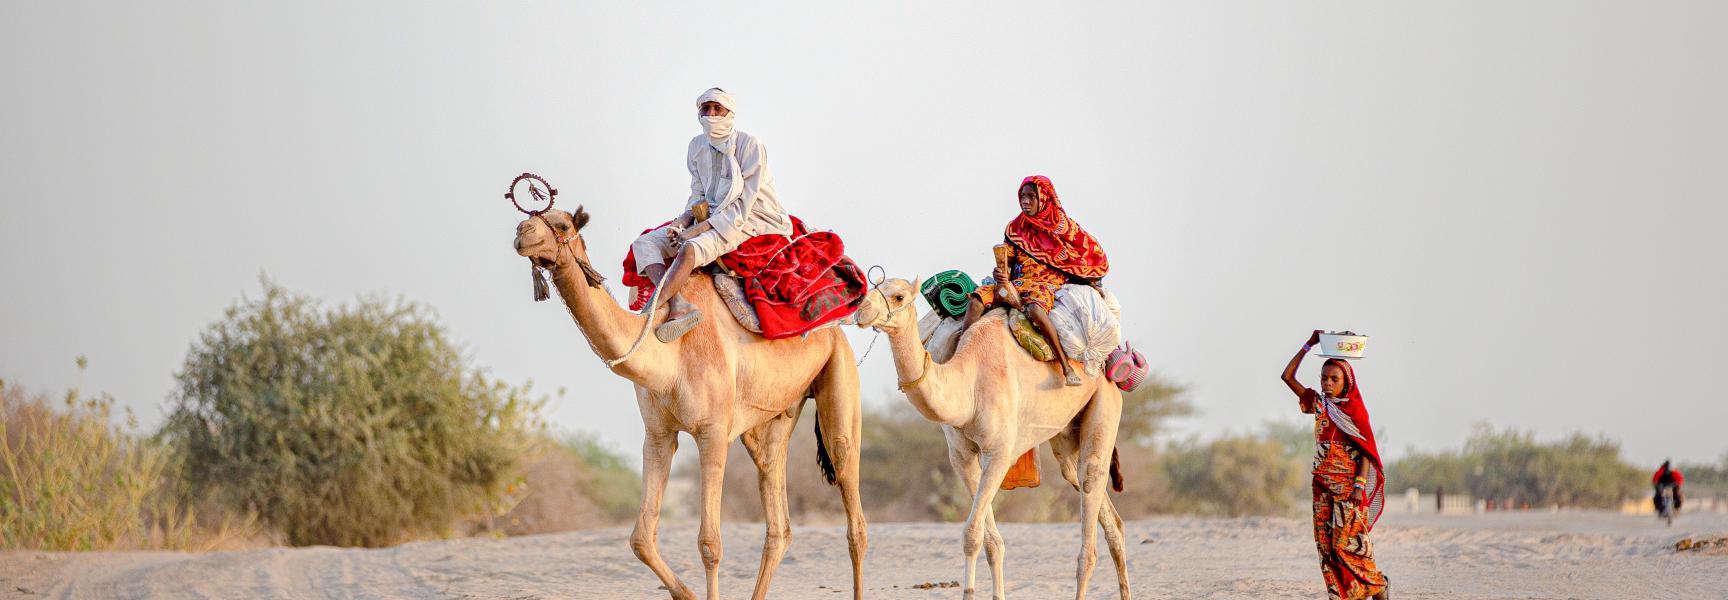 Une famille nomade au Tchad